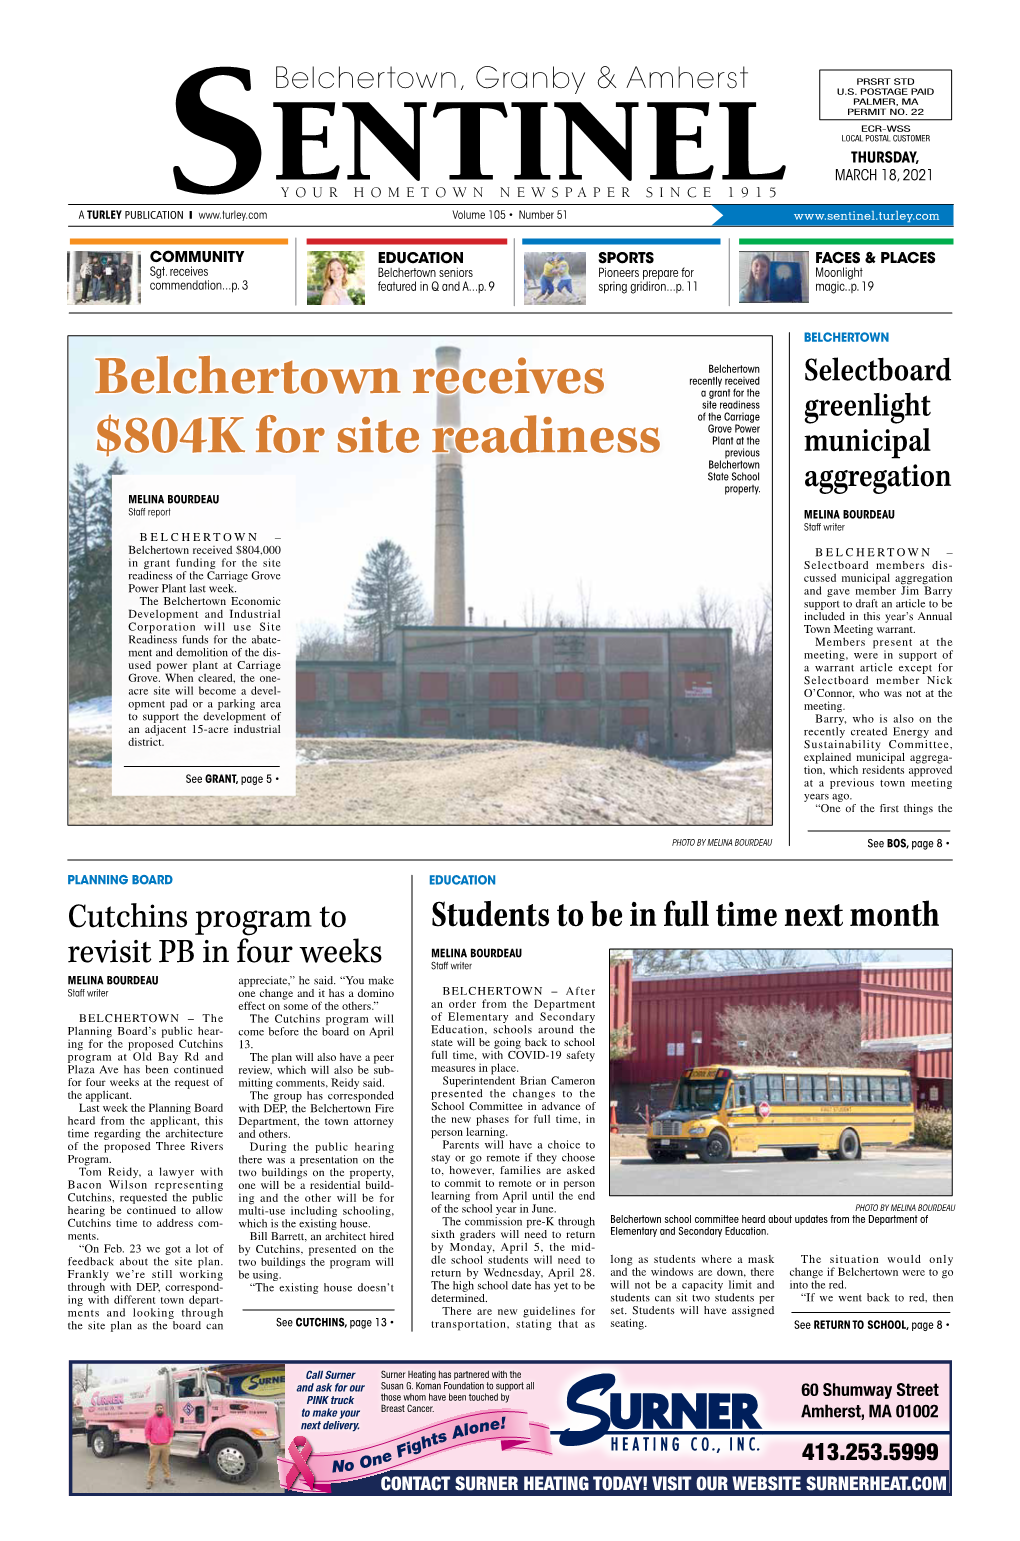 Belchertown Receives $804K for Site Readiness